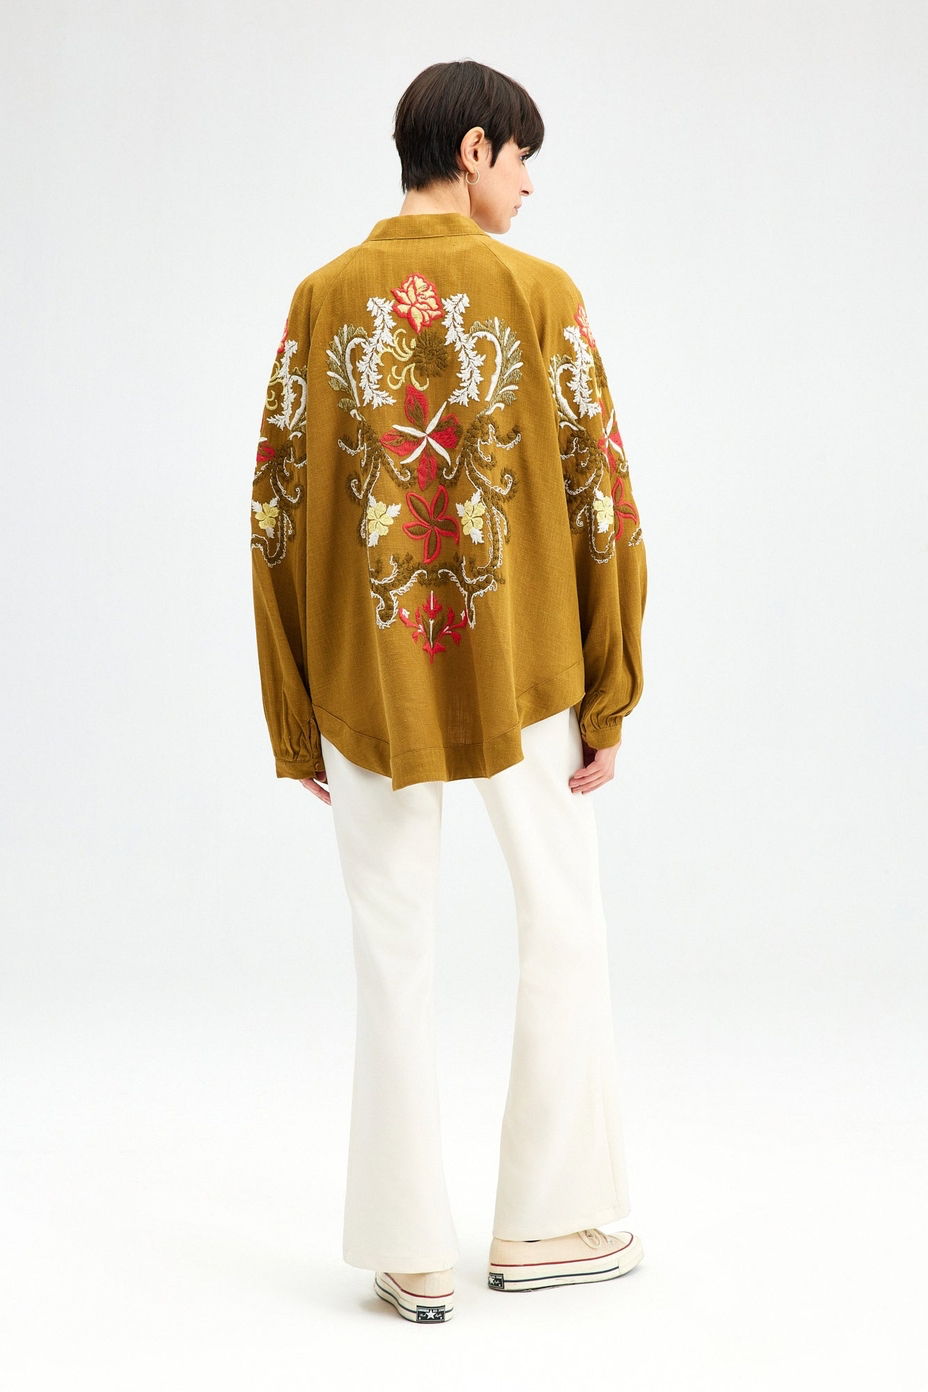 Touché Prive - Kimono with Embroidery